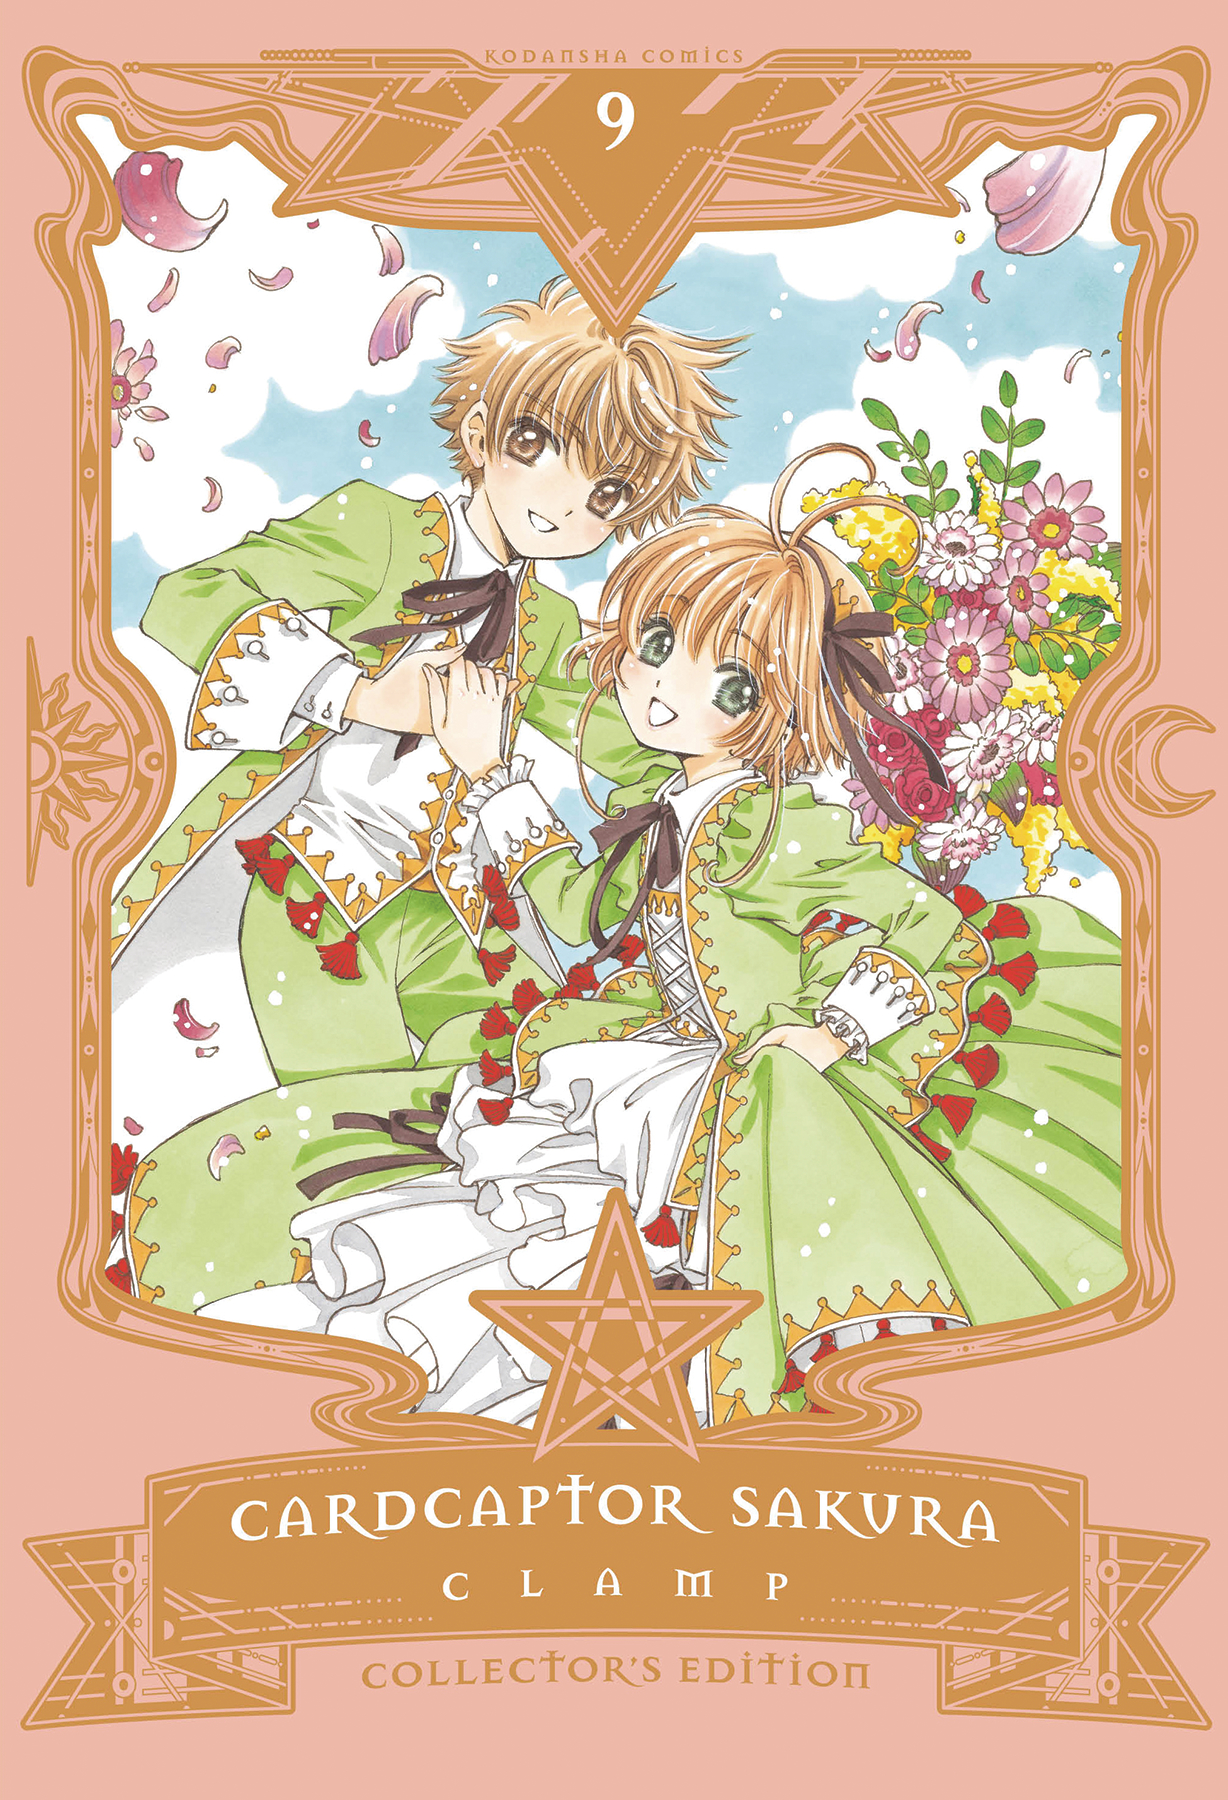 Cardcaptor Sakura Collected Edition Hardcover Volume 9 (Of 9)